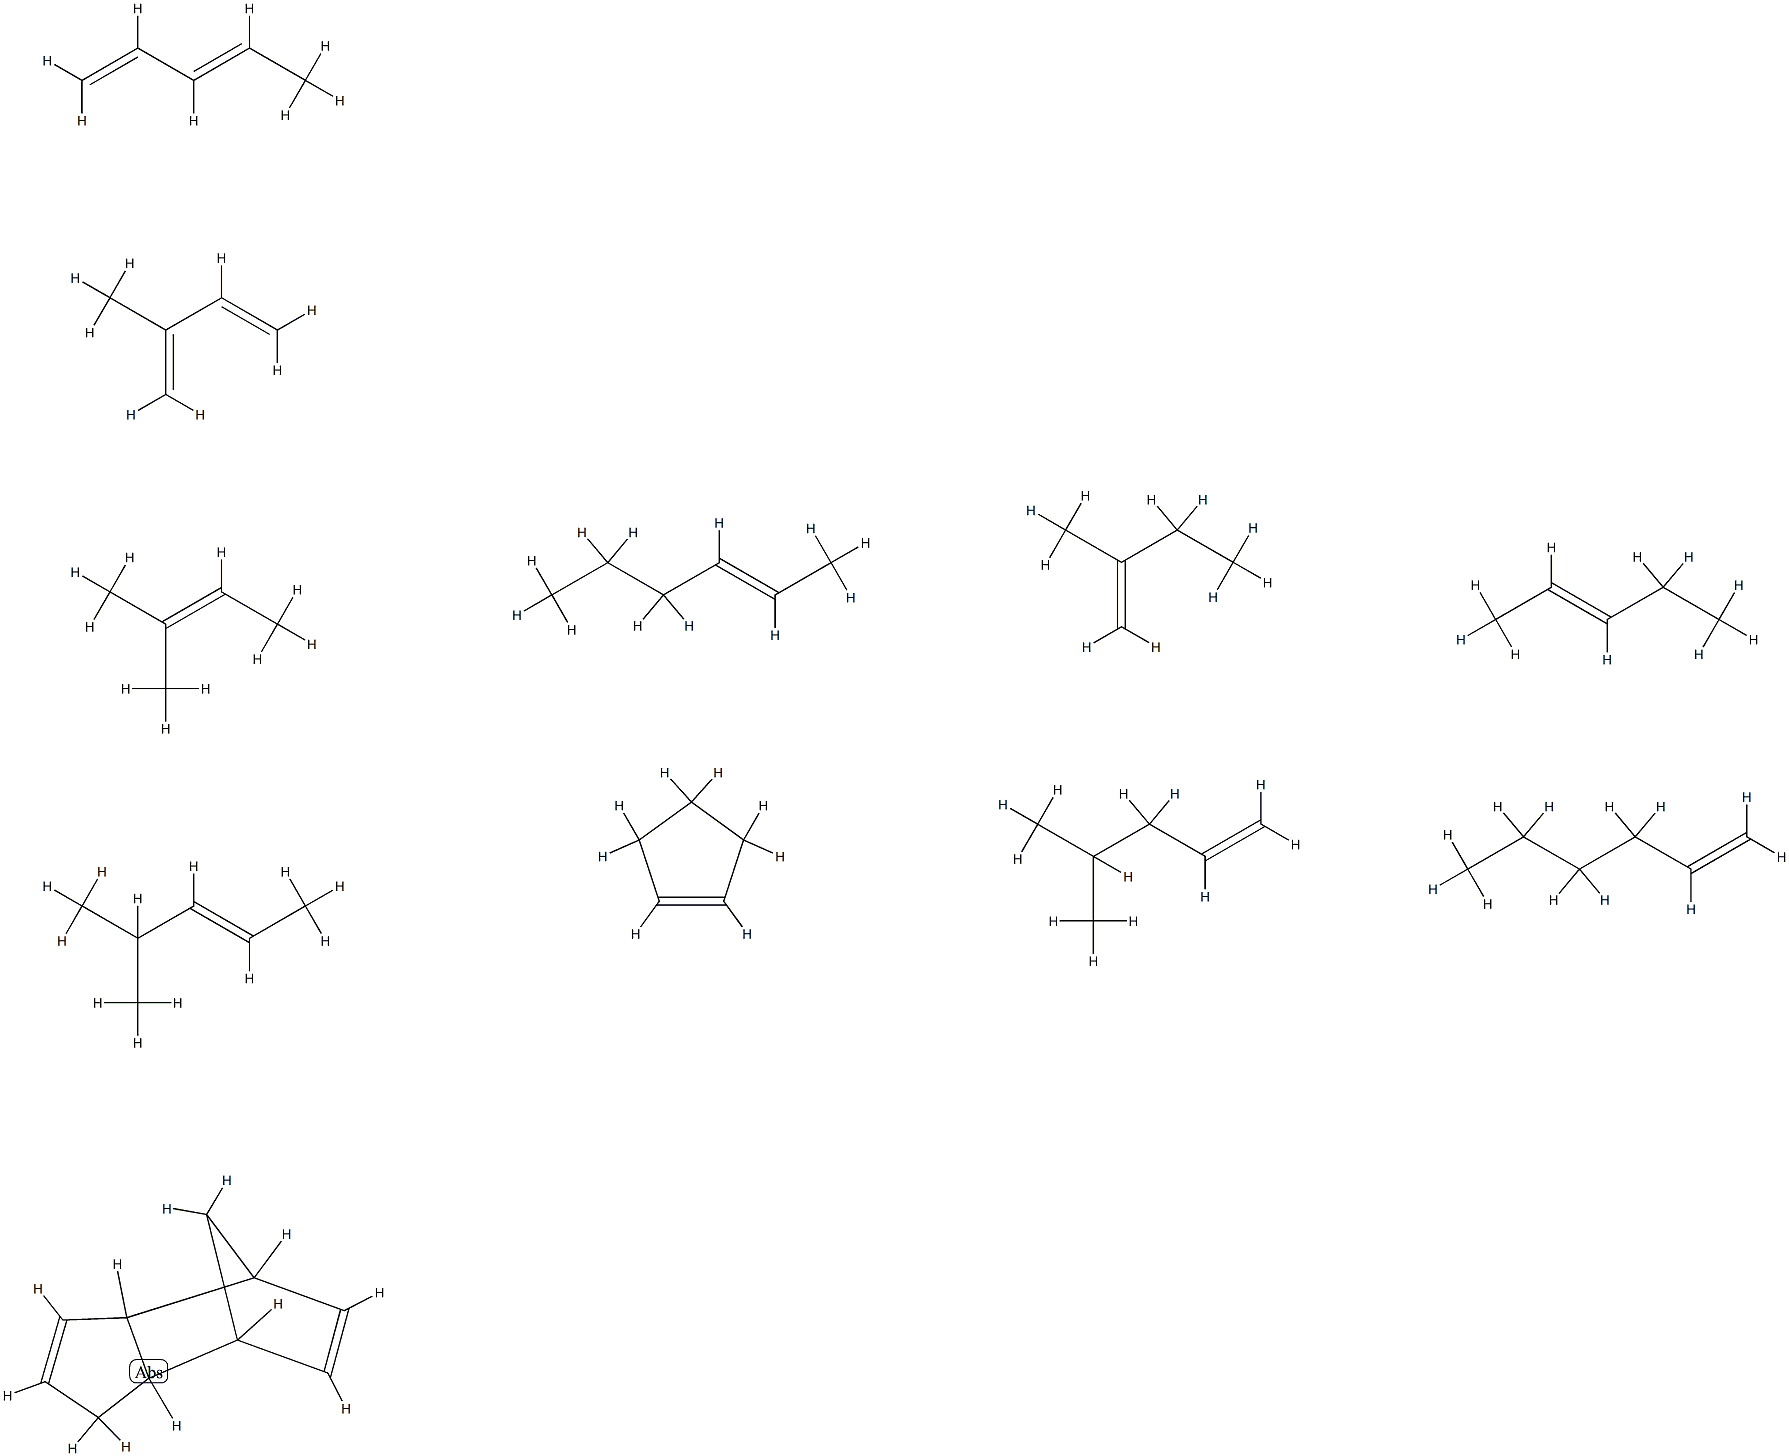 4,7-Methano-1H-indene, 3a,4,7,7a-tetrahydro-, polymer with cyclopentene, 1-hexene, 2-hexene, 2-methyl-1,3-butadiene, 2-methyl-1-butene, 2-methyl-2-butene, 4-methyl-1-pentene, 4-methyl-2-pentene, 1,3-pentadiene and 2-pentene|3A,4,7,7A-四氢-4,7-亚甲基-1H-茚与环戊烯、1-己烯、2-己烯、2-甲基-1,3-丁二烯、2-甲基-1-丁烯、2-甲基-2-丁烯、4-甲基-1-戊烯、4-甲基-2-戊烯、1,3-戊二烯和2-戊烯的聚合物